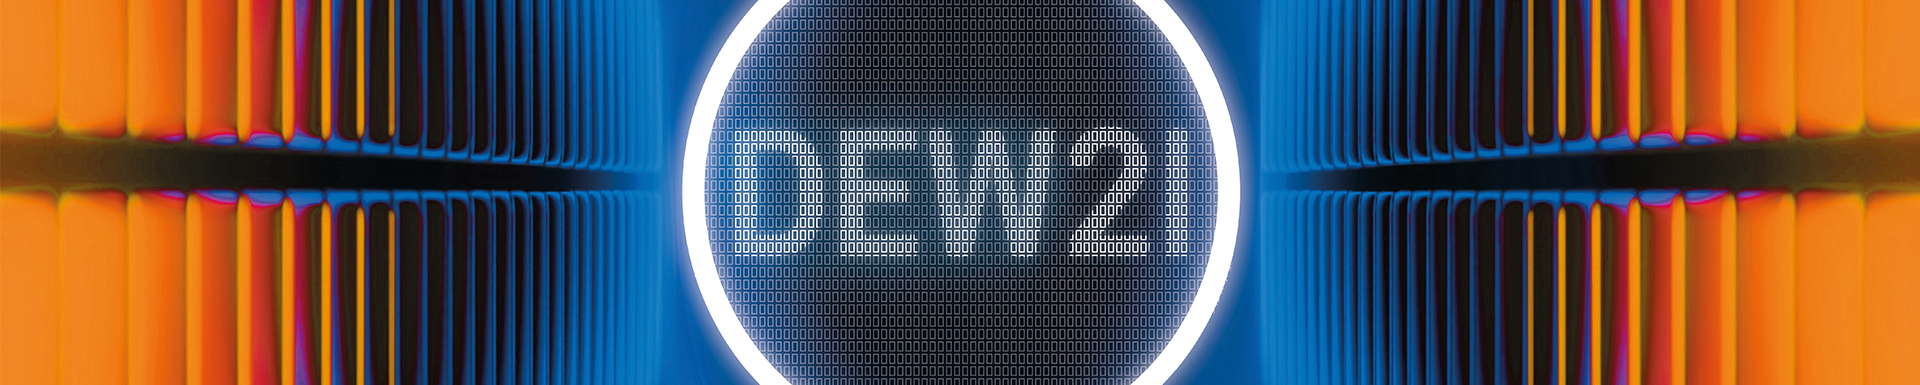 DEW21-Metaverse-Header-Desktop